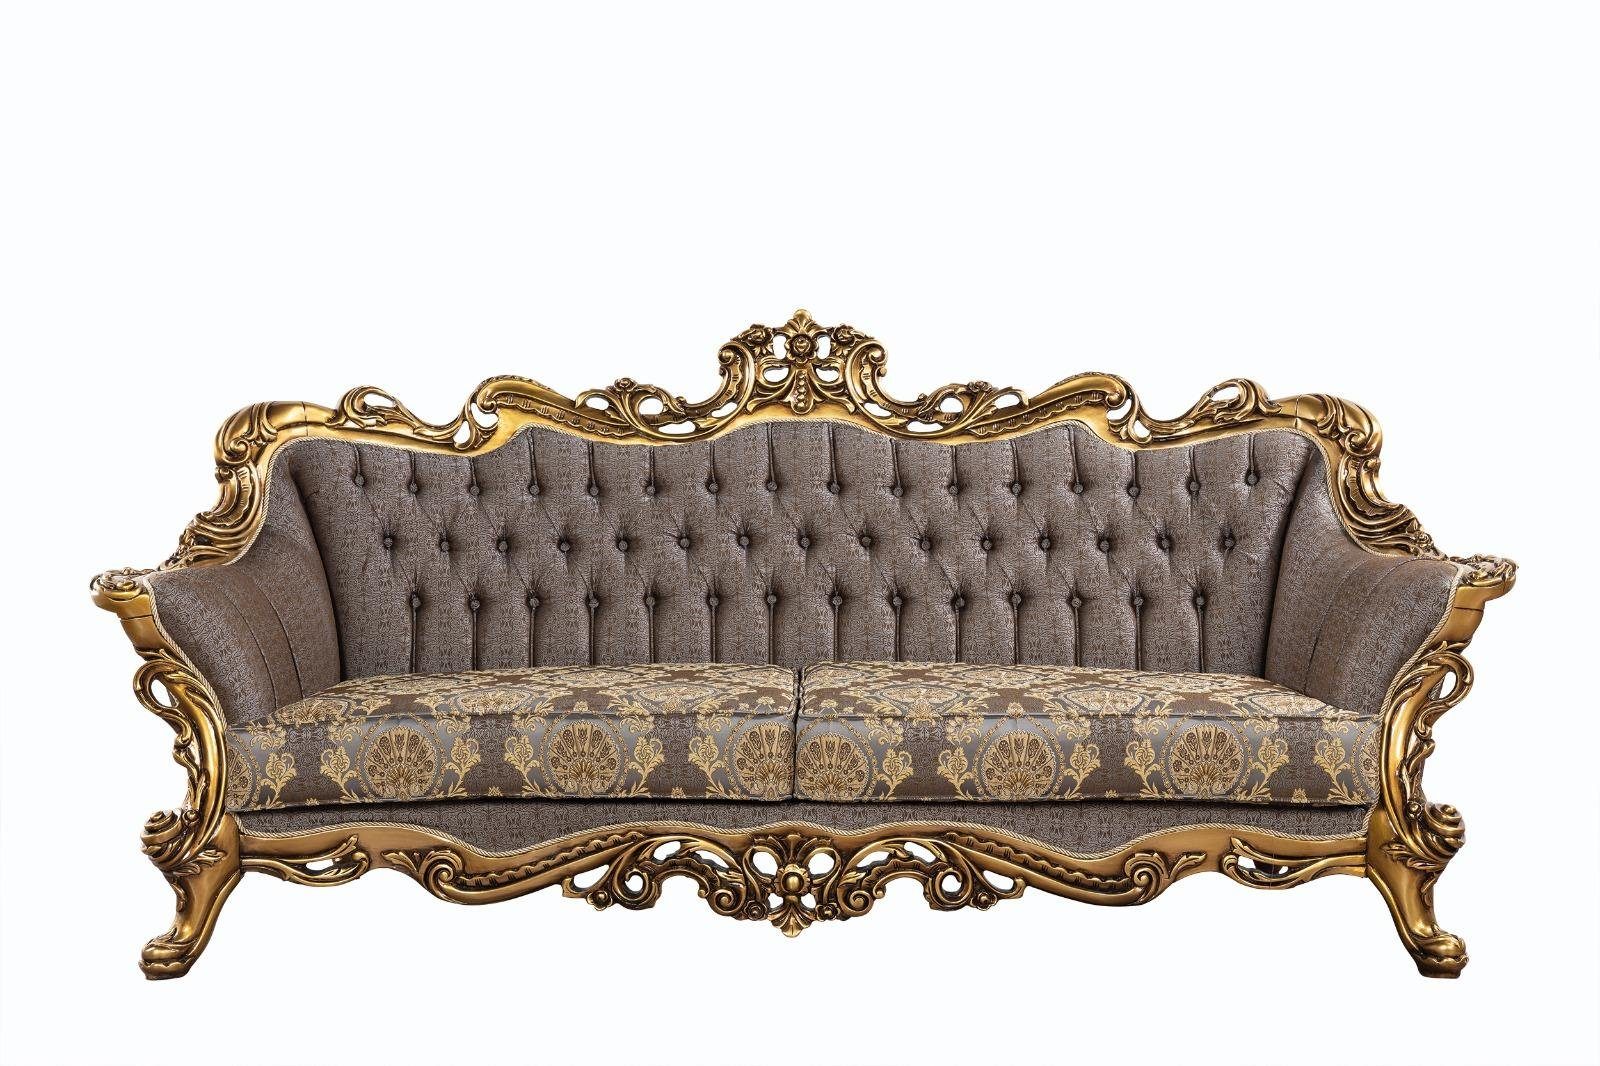 JVmoebel Sofa, Klassische luxus Chesterfield Couch Dreisitzer stilvoll Neu